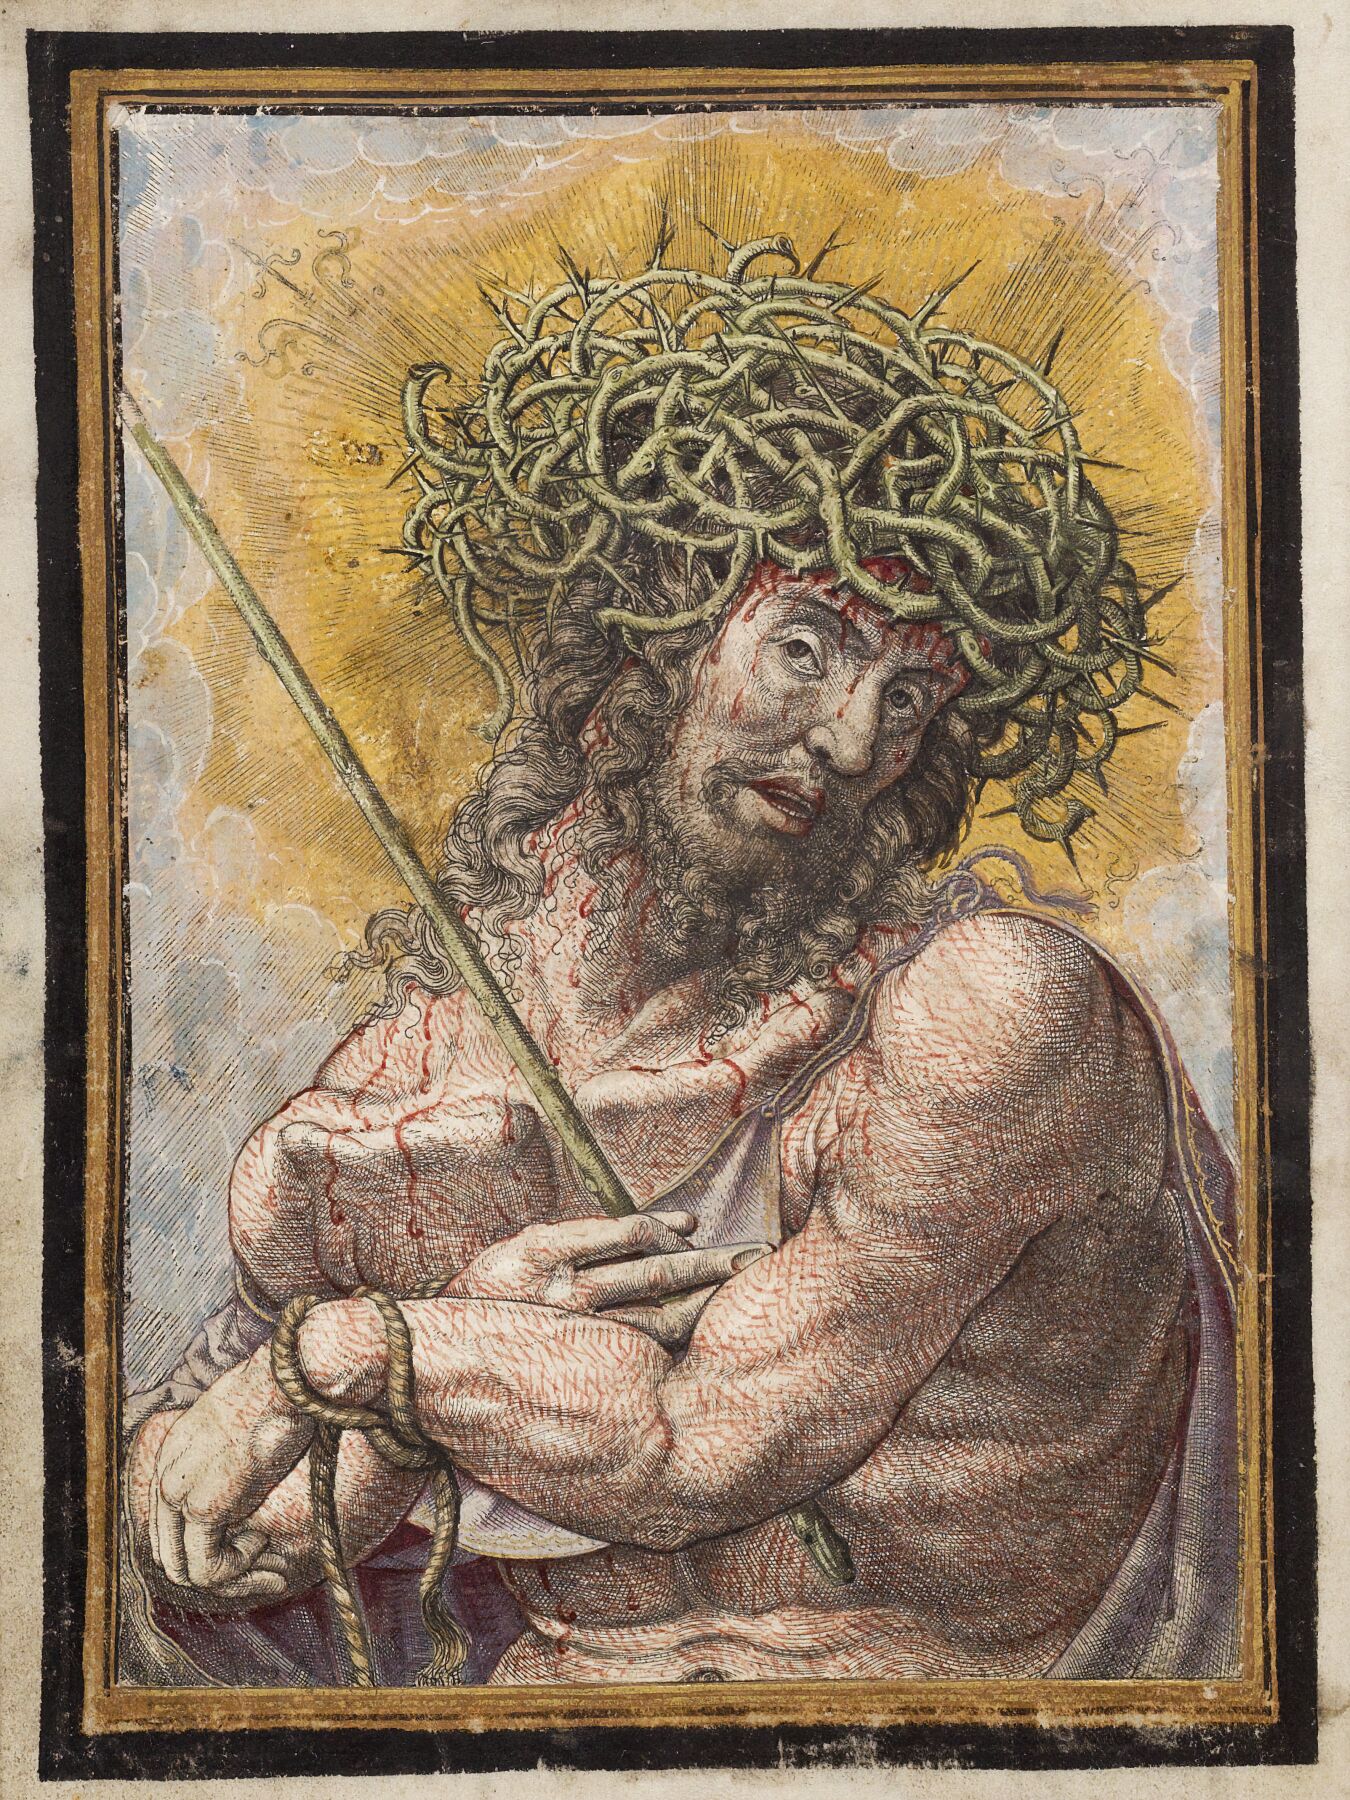 Christ as the Man of Sorrows, Frans Crabbe van Espleghem, 1497 - 1552